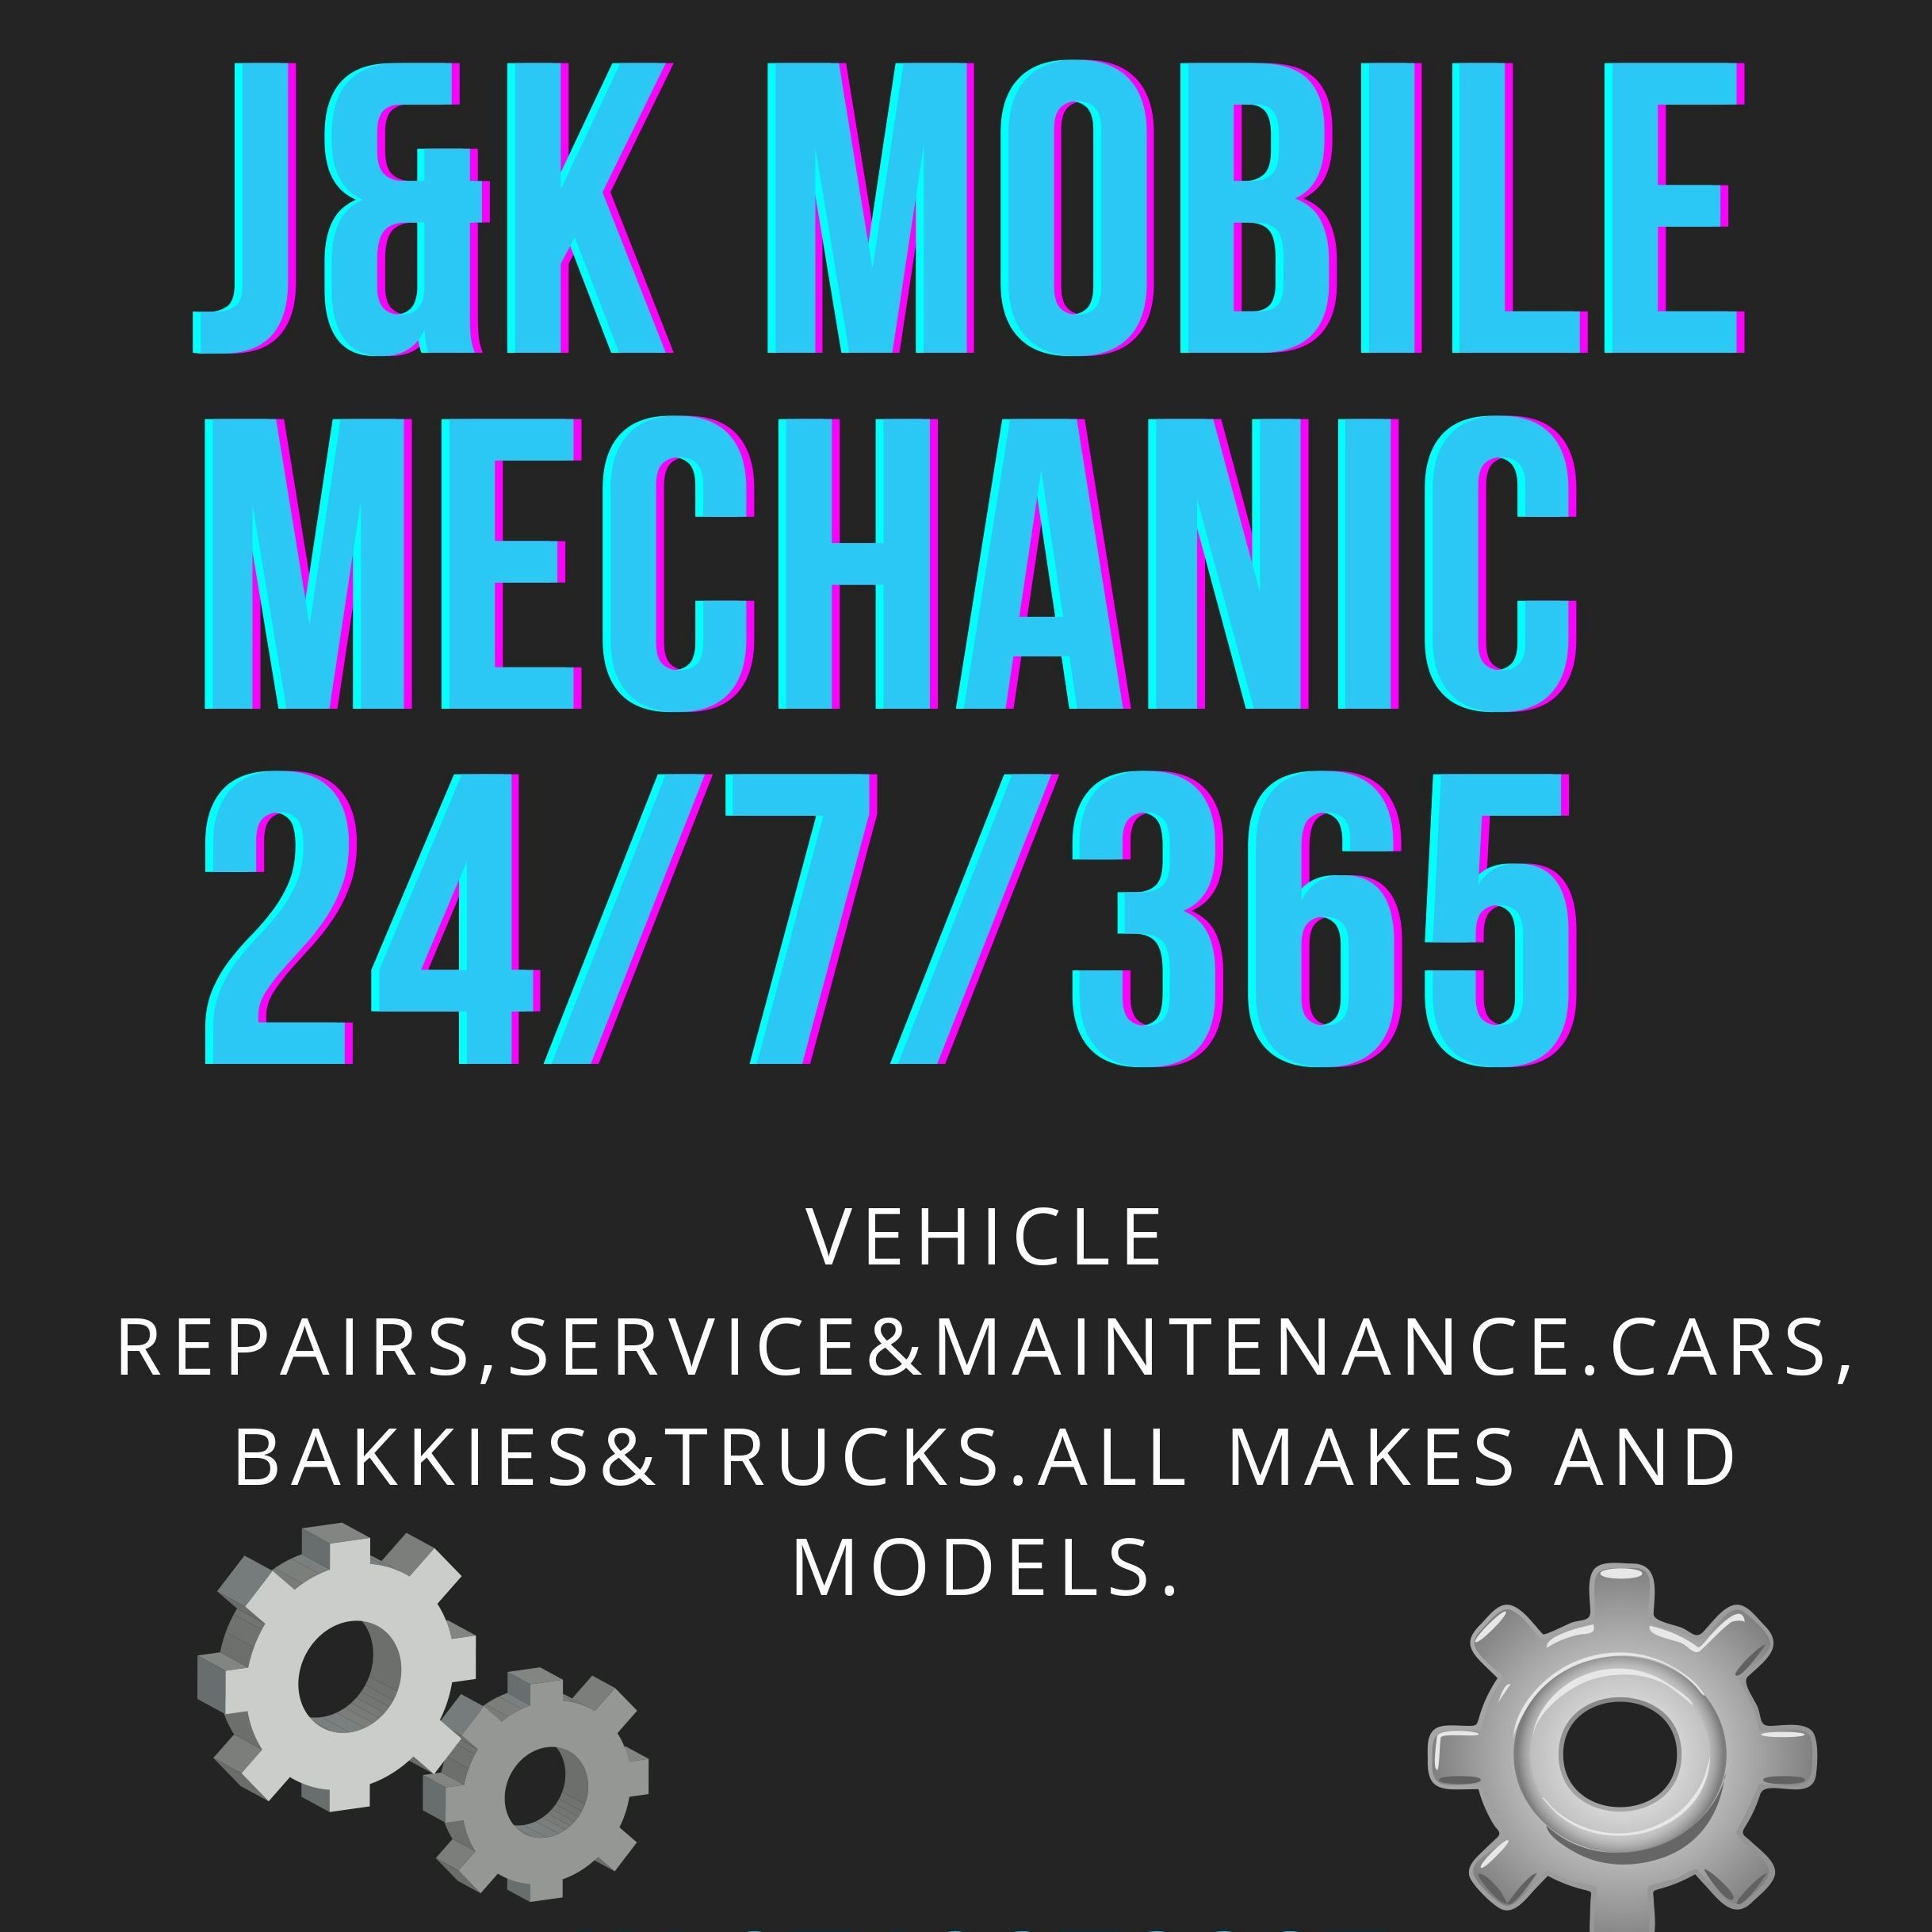 JKMobileMechanic24/7/365 Automotive repairs.